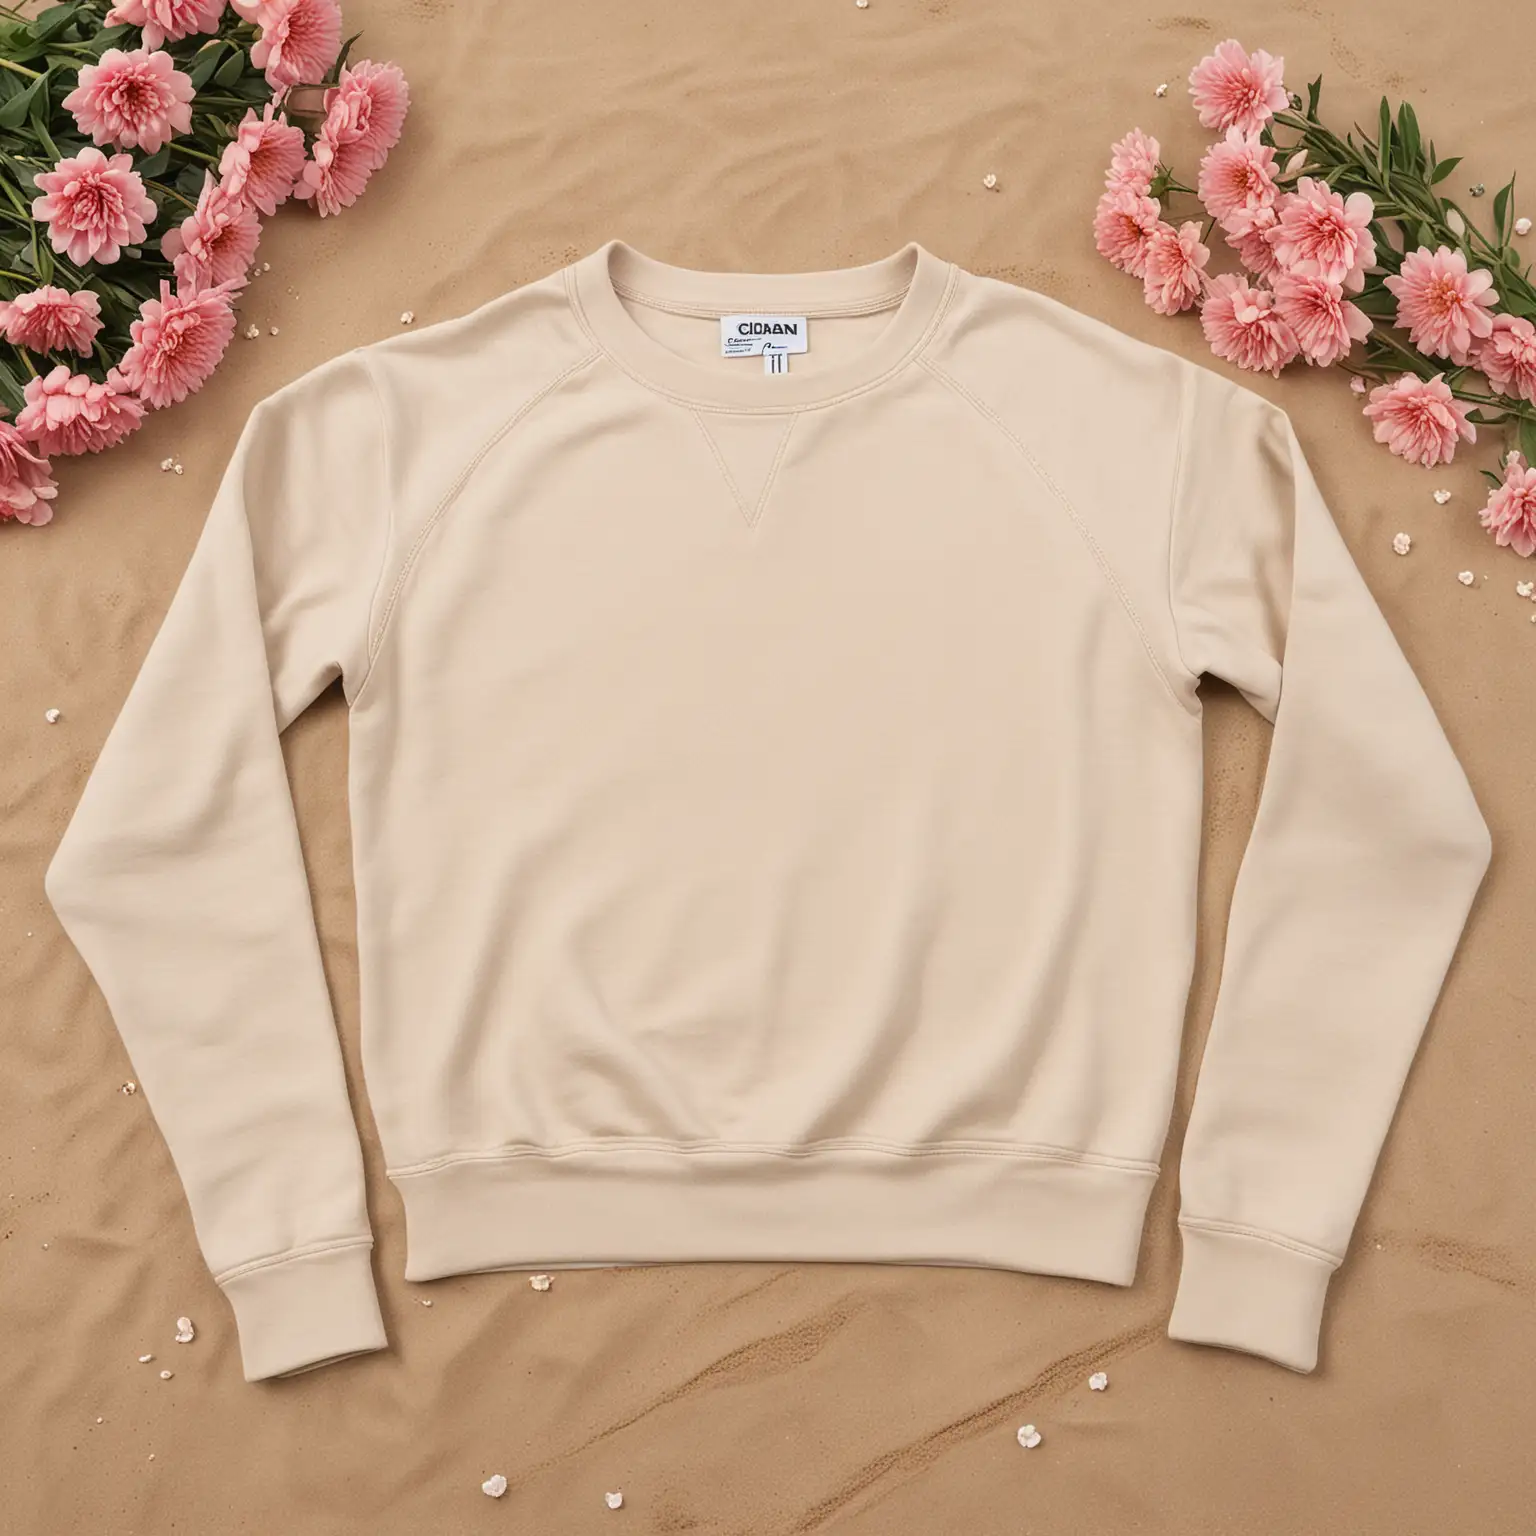 Stylish Sand Glidan 18000 Sweatshirt Flat Lay with Floral Backdrop